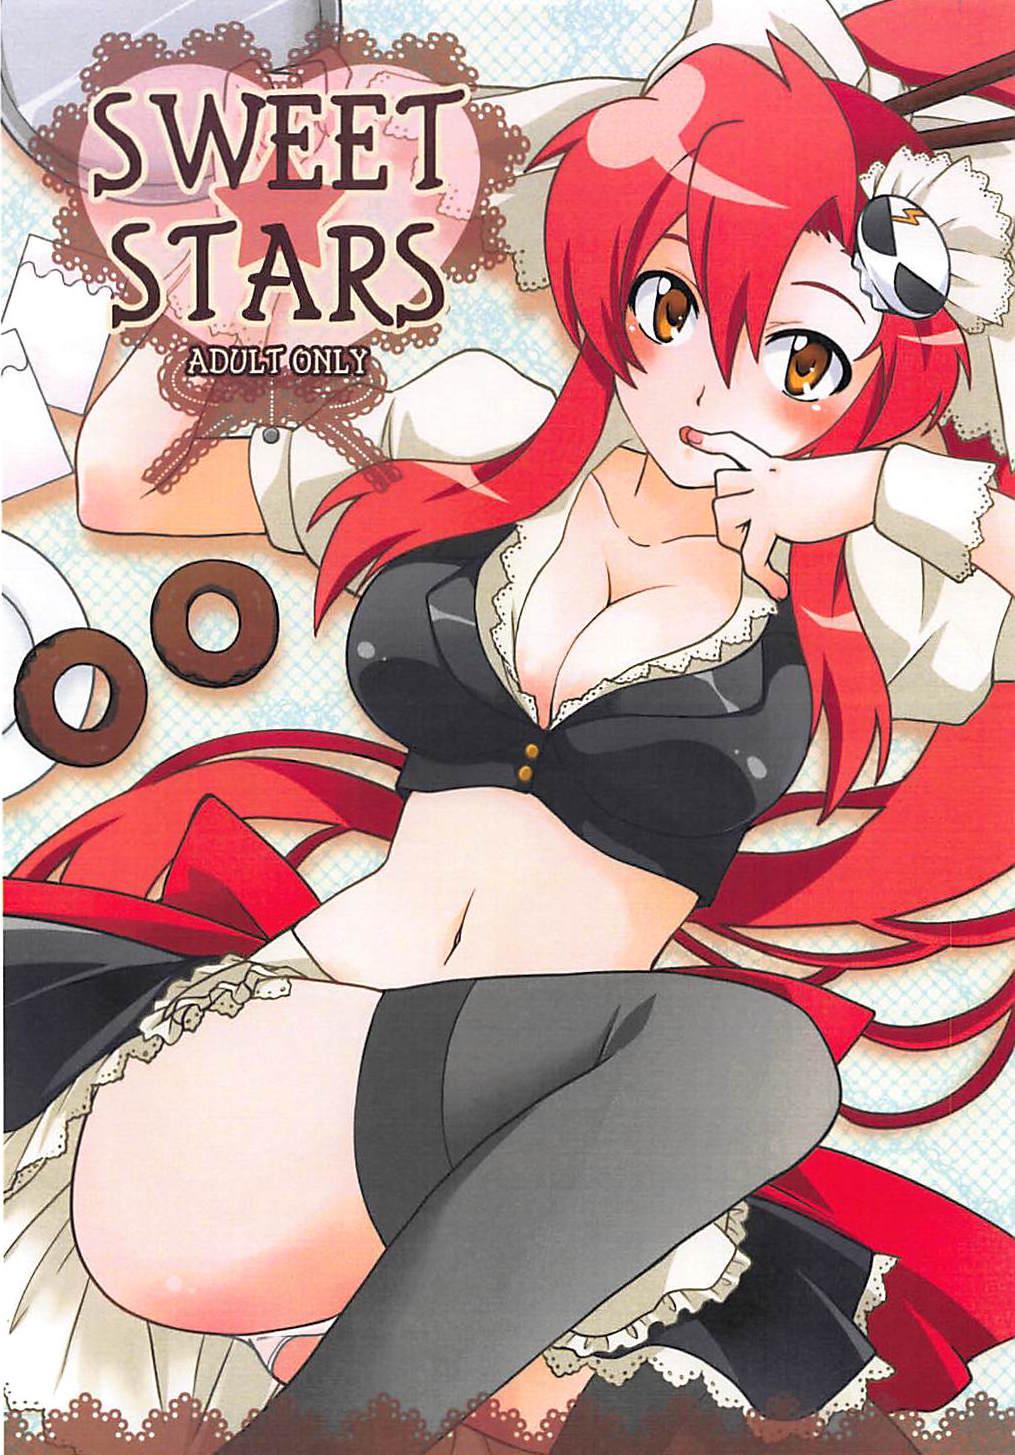 SWEET STARS 0